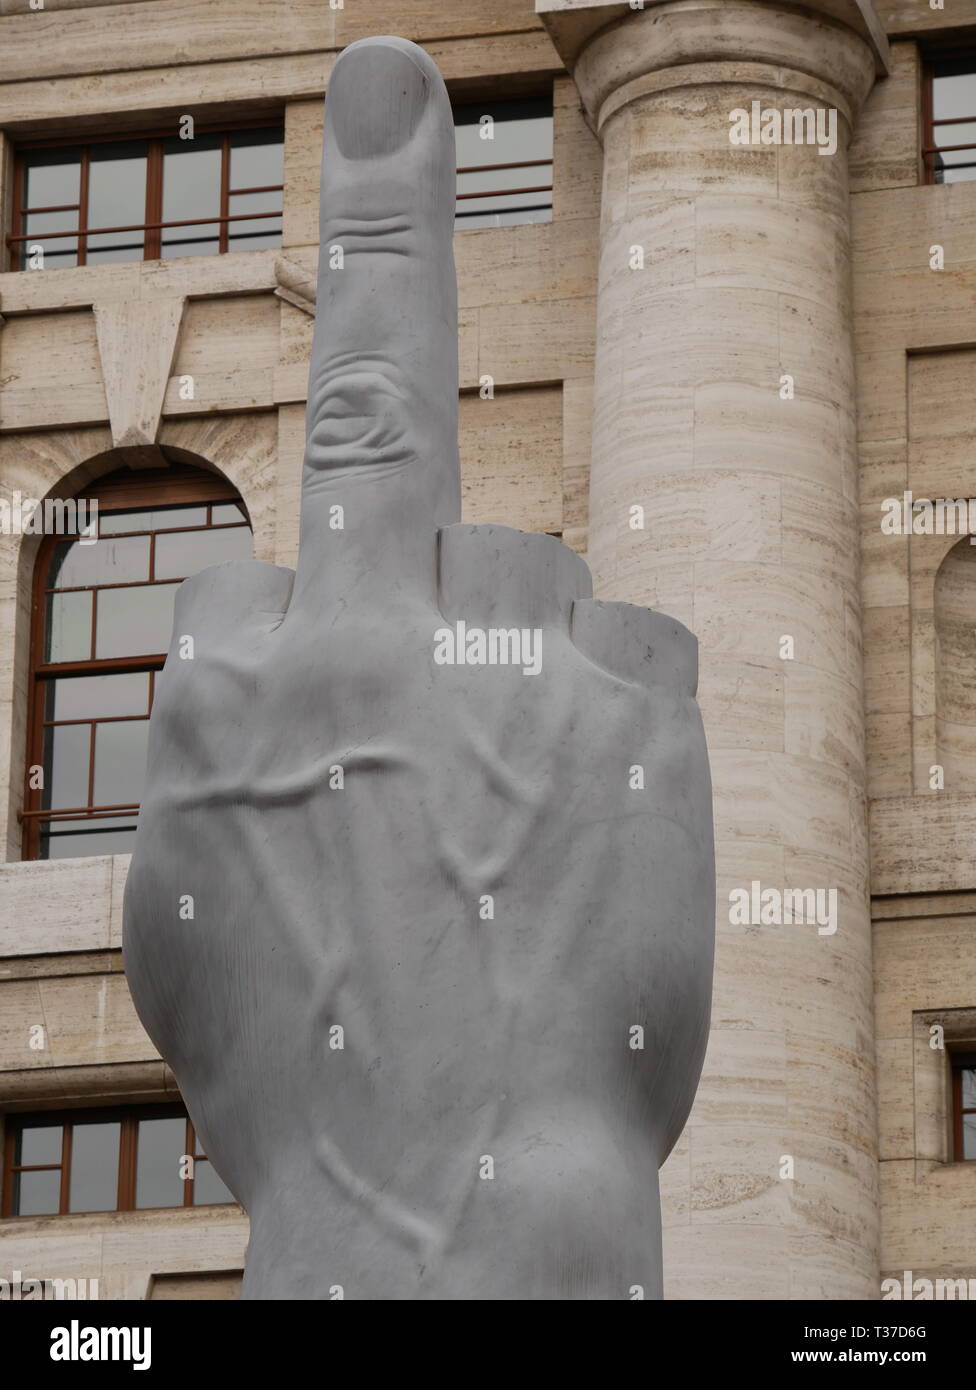 Giant Middle Finger